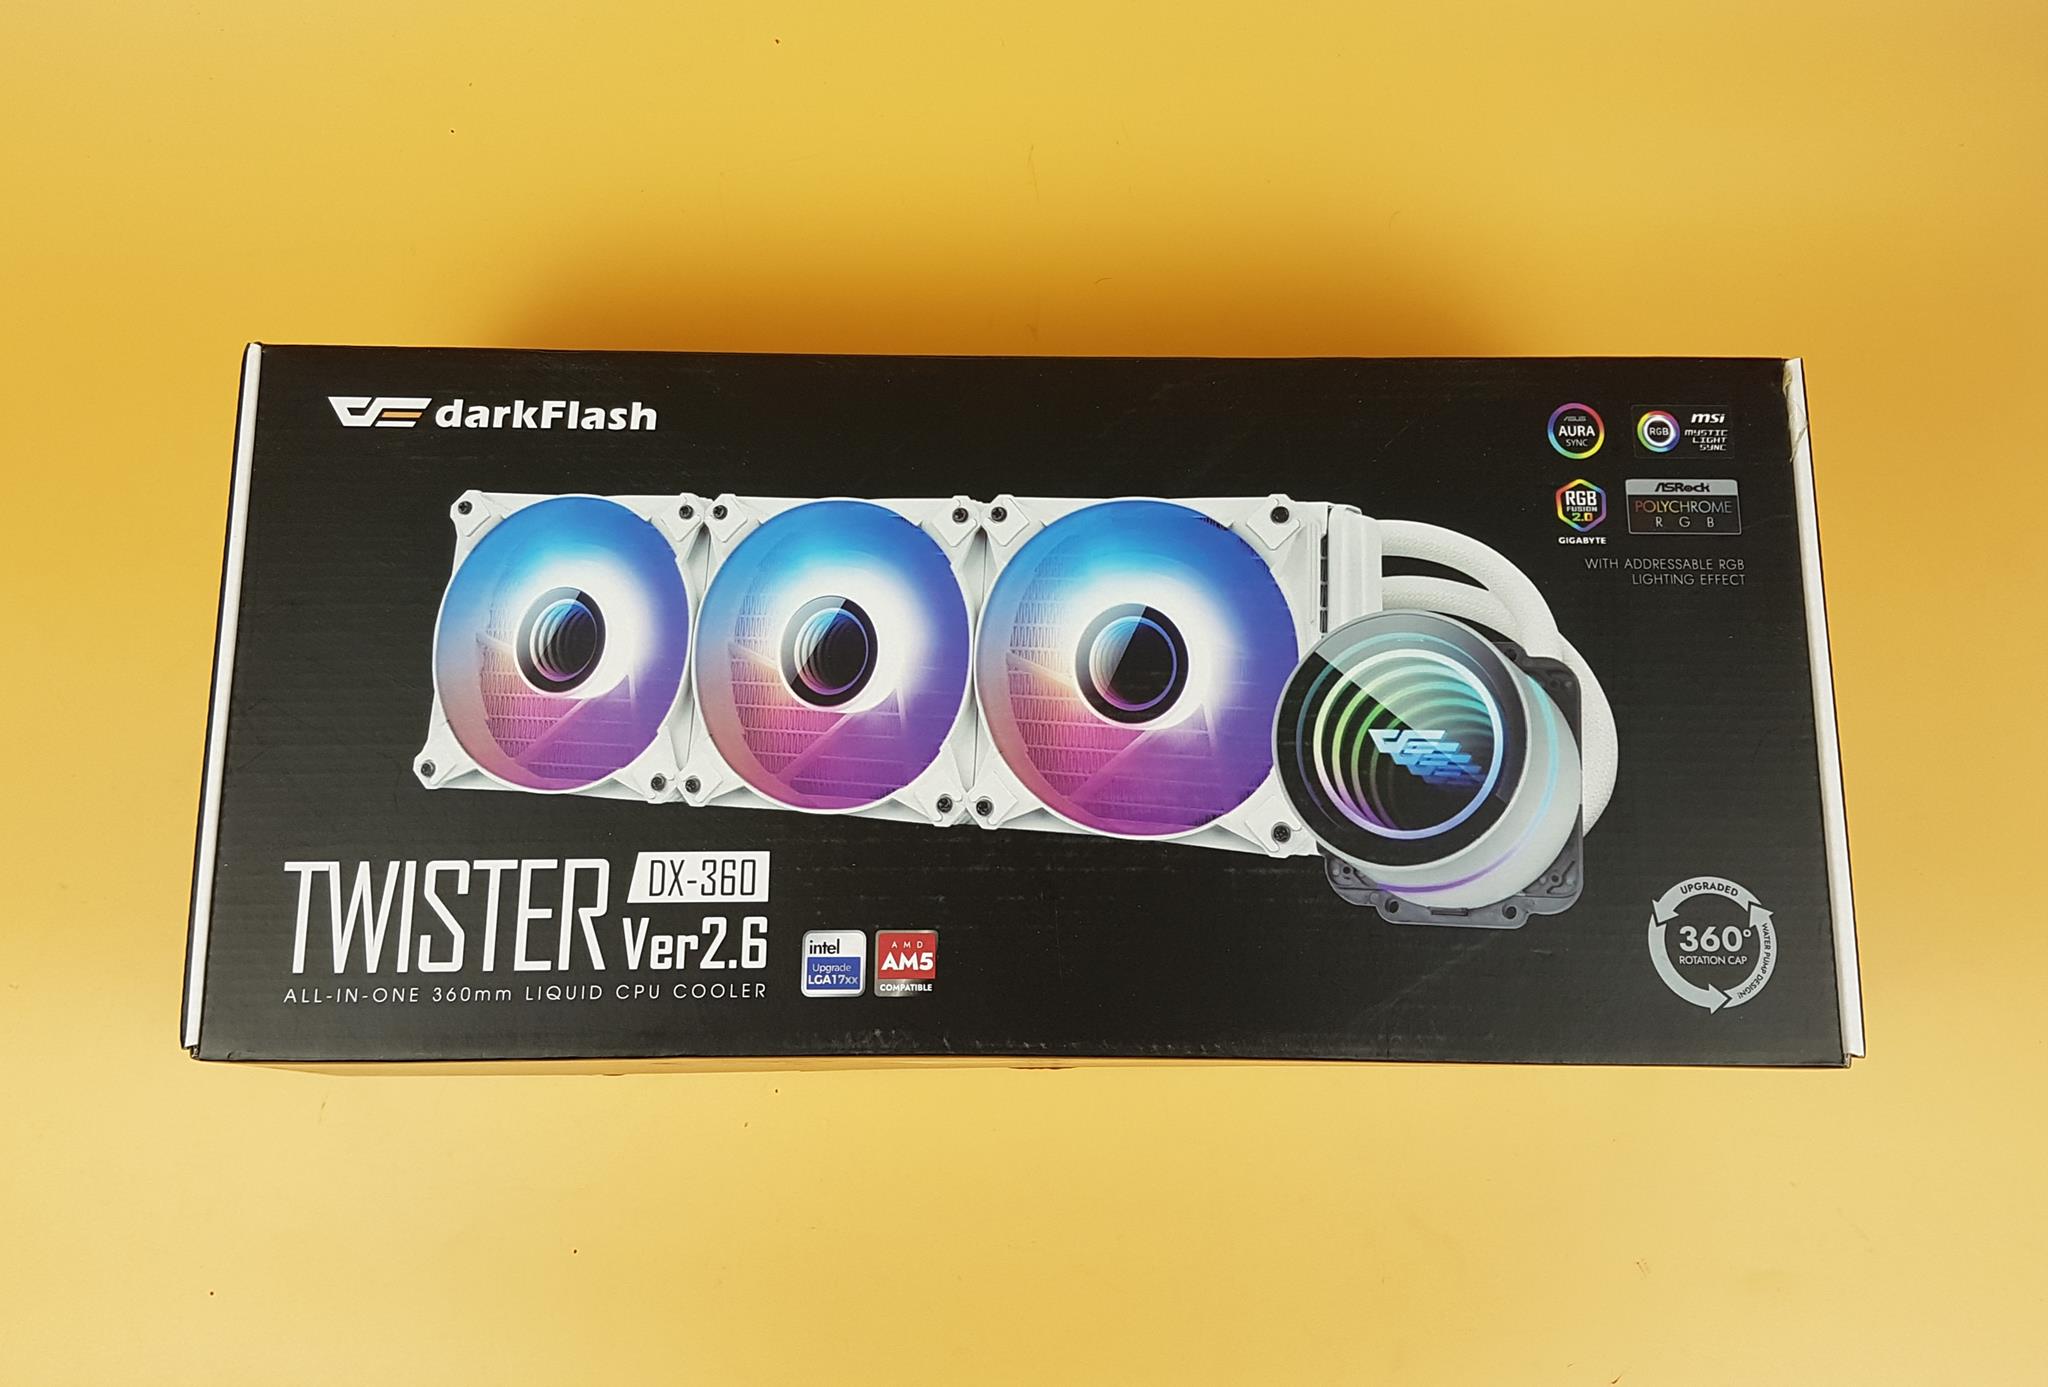 wister DX360 V2.6 box